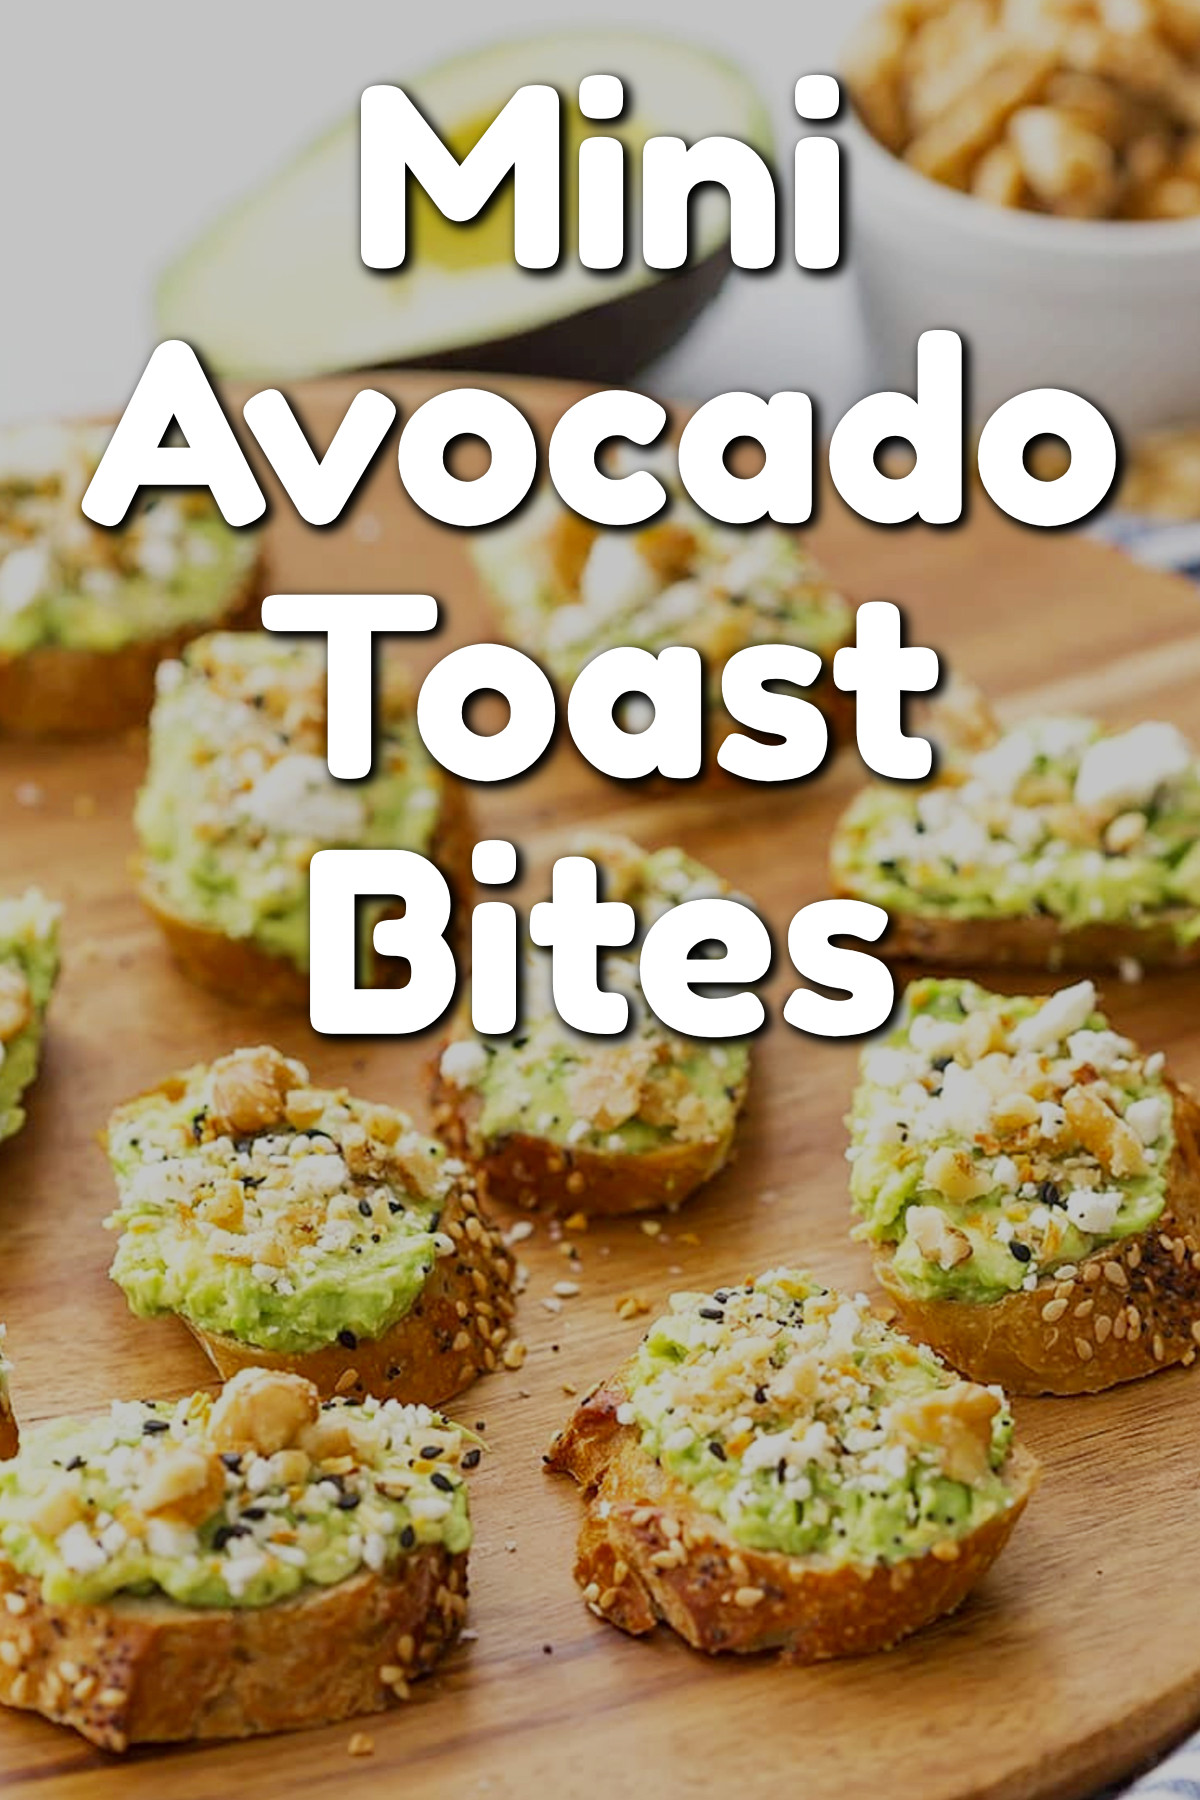 brunch food ideas - Mini Avocado Toast Bites